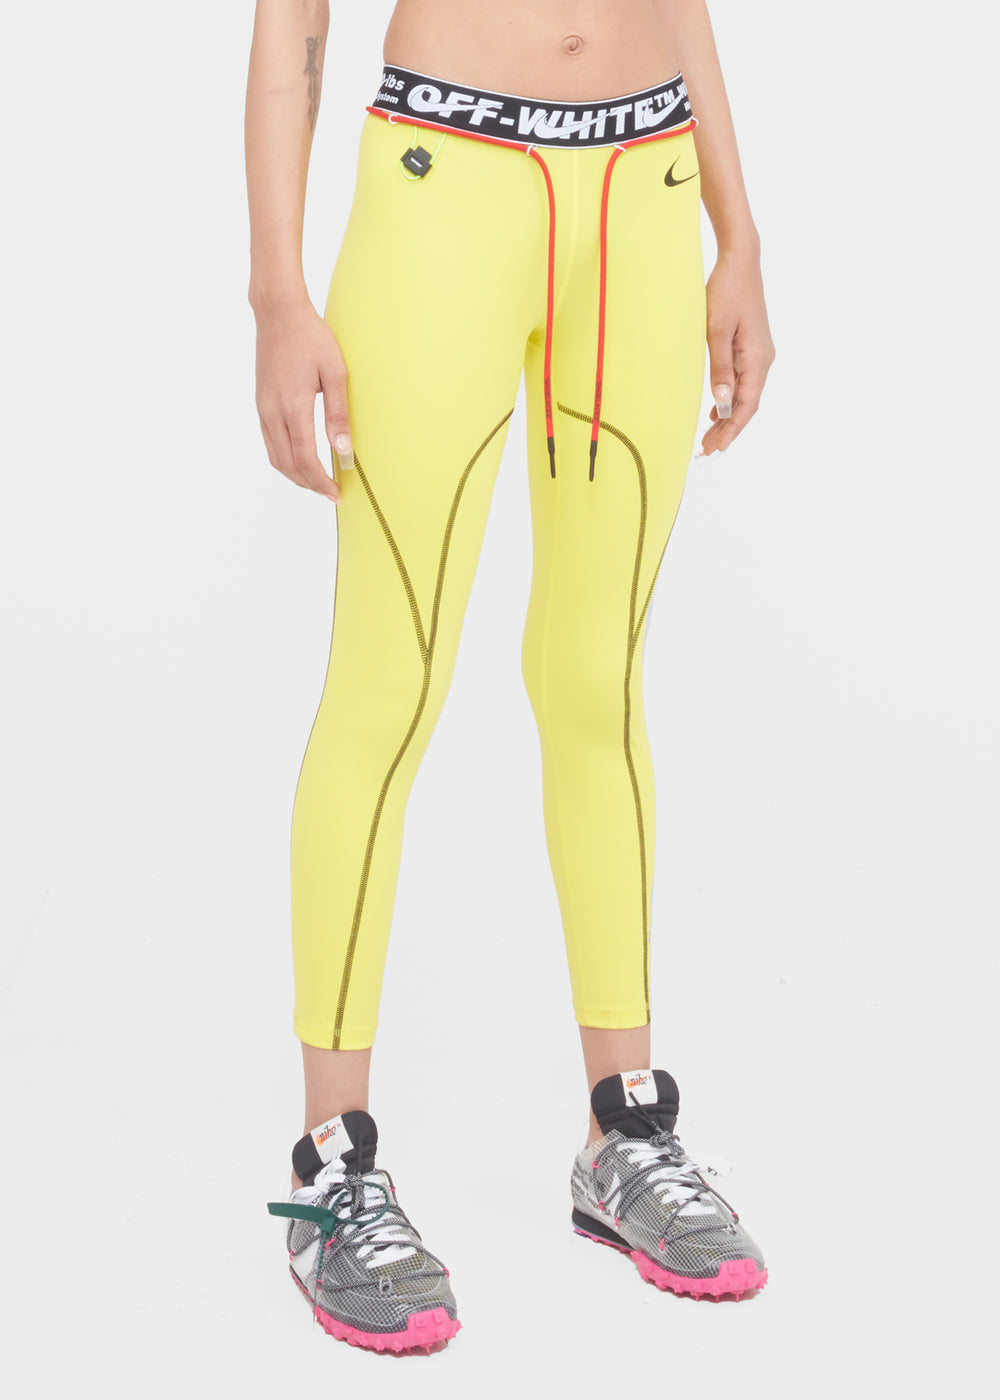 yellow nike off white leggings